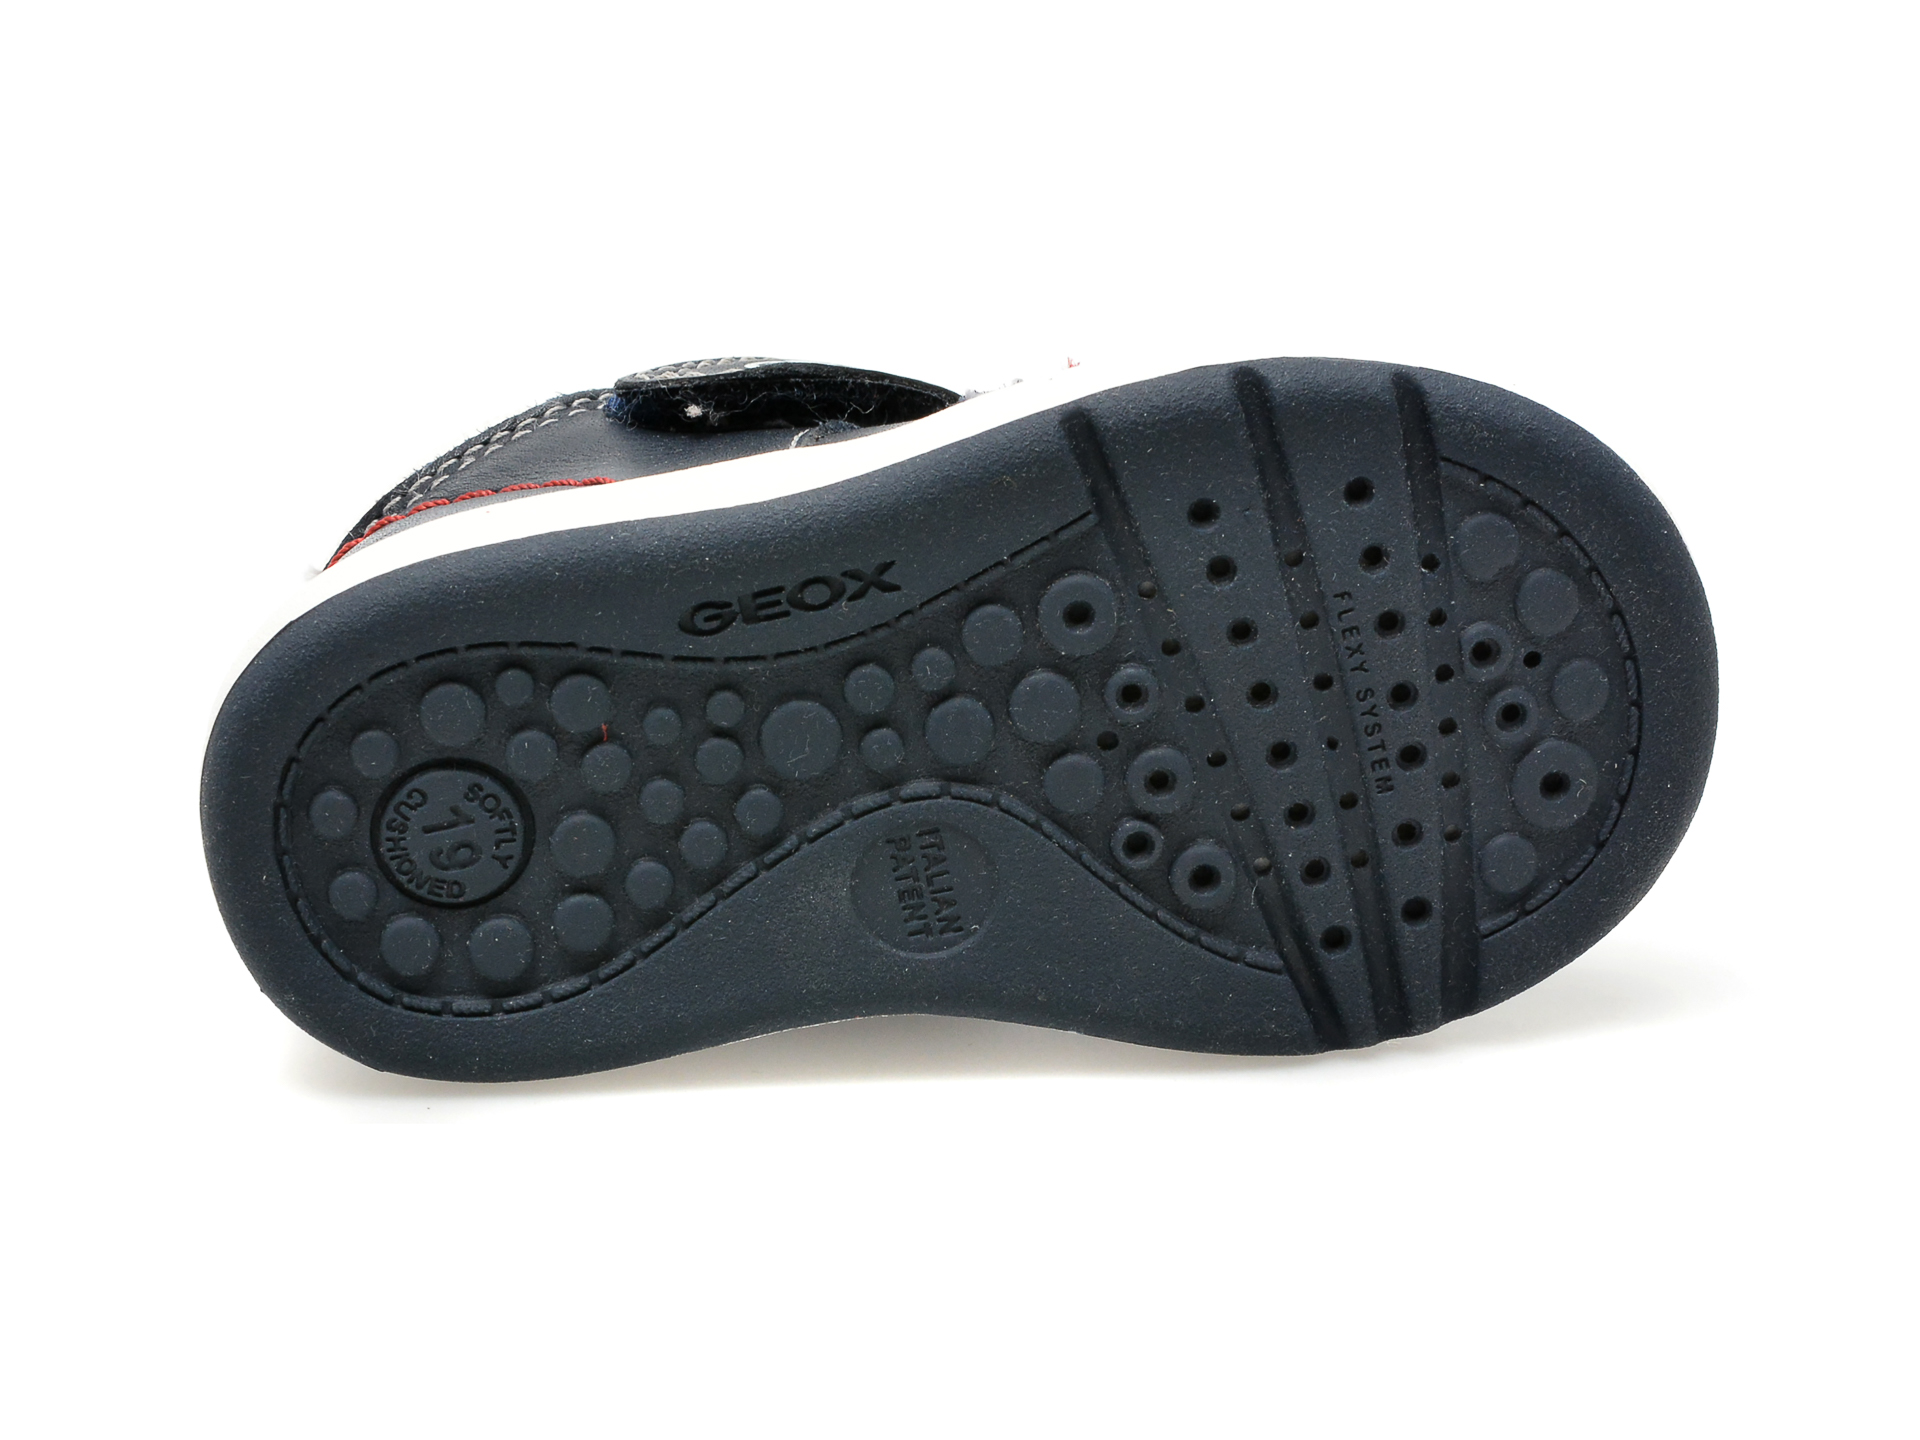 Pantofi GEOX bleumarin, B154DA, din material textil si piele naturala